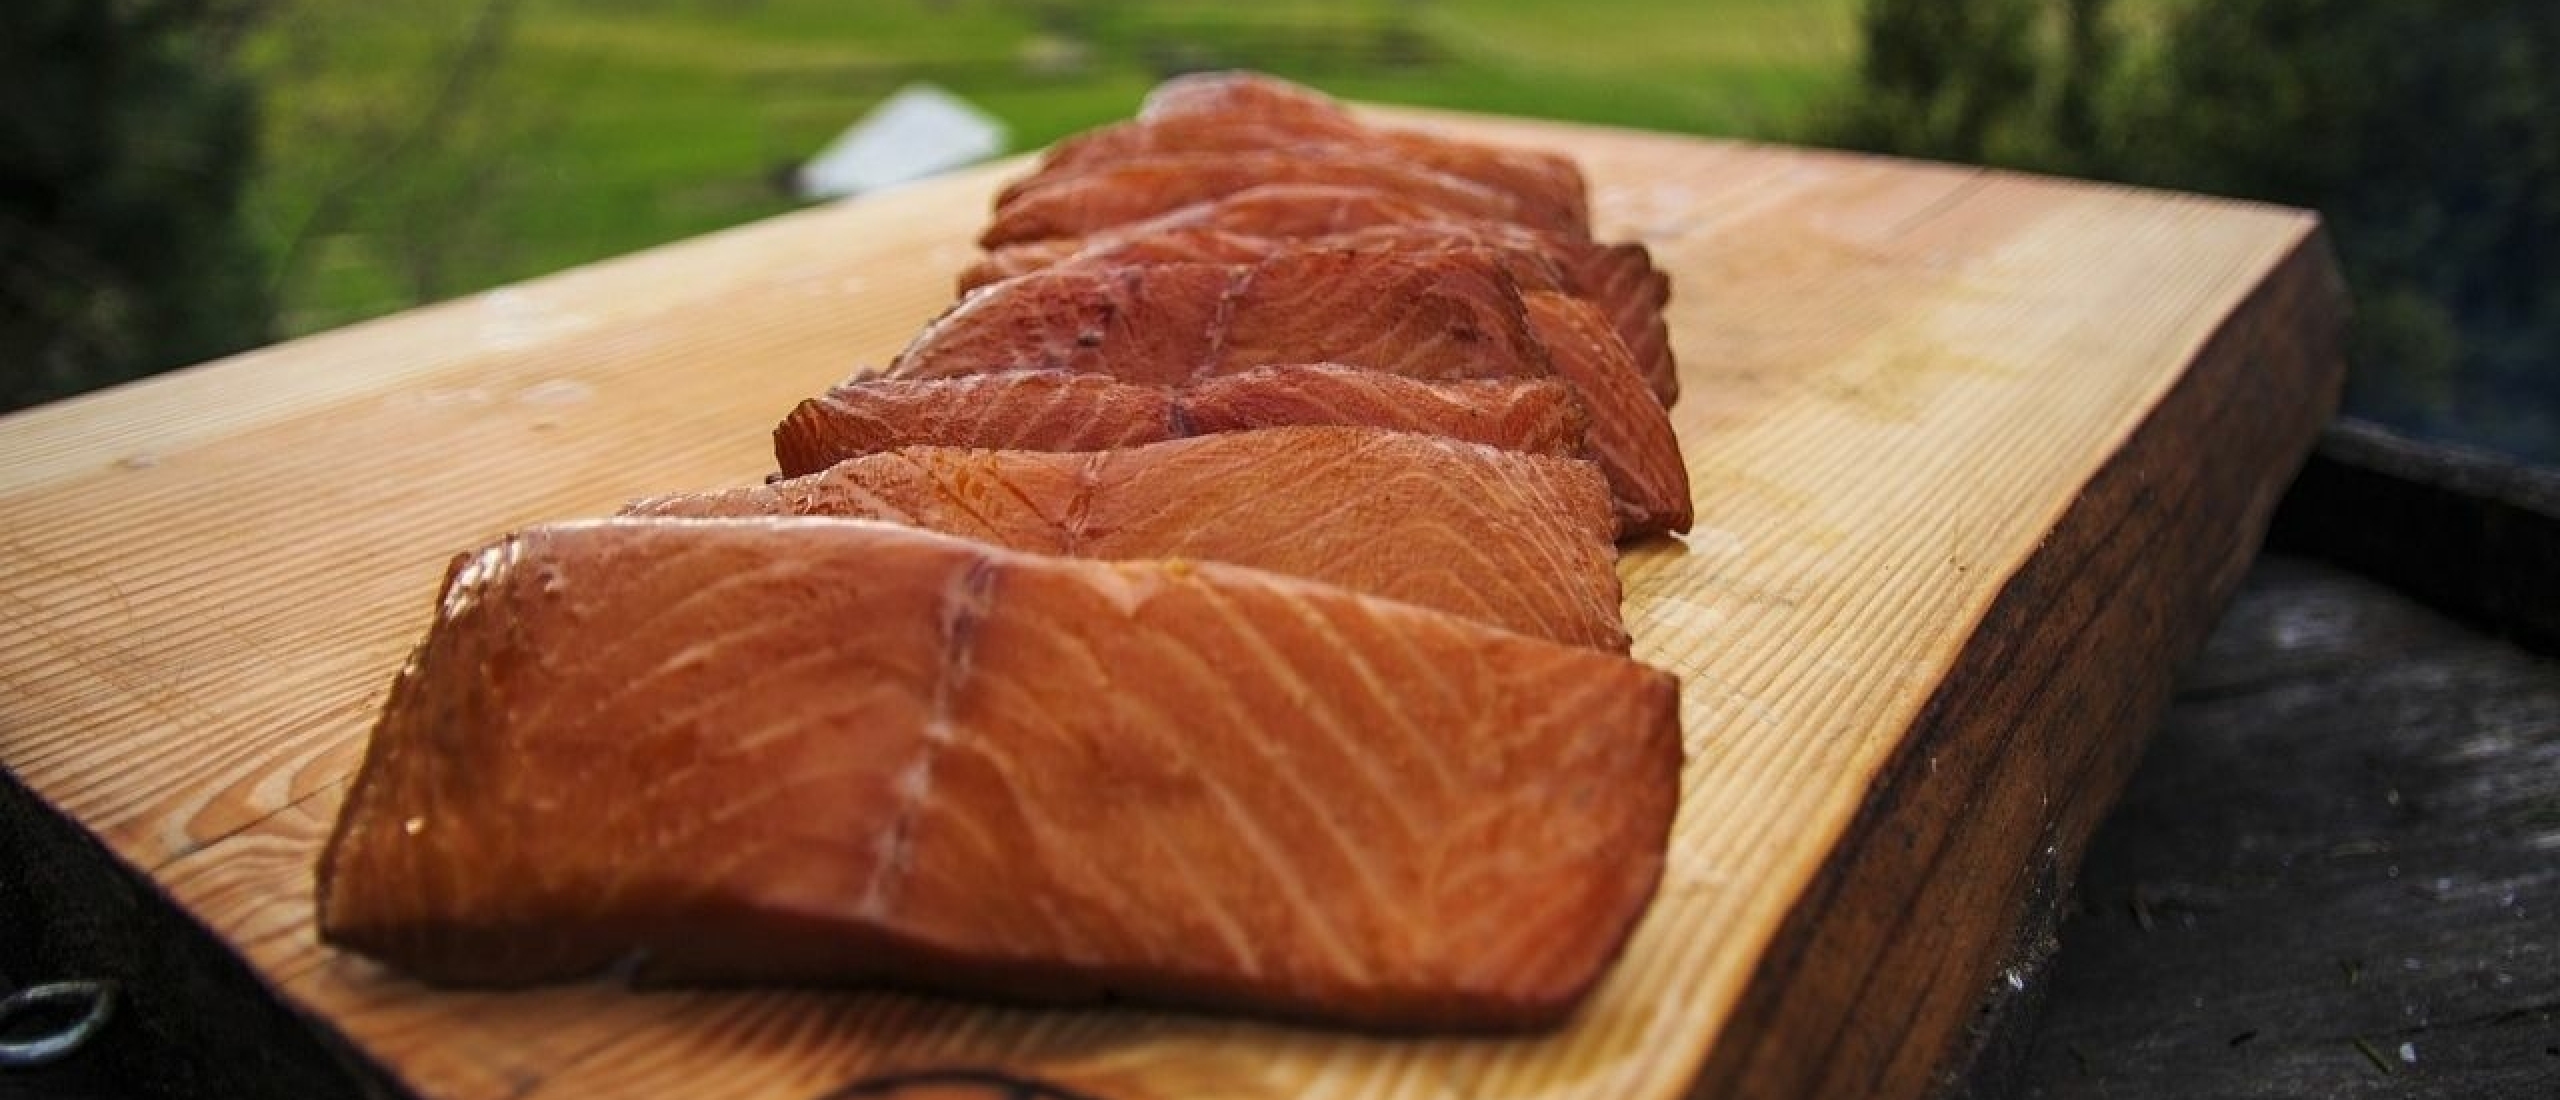 Foodhack: makkelijk en snel pulled salmon maken